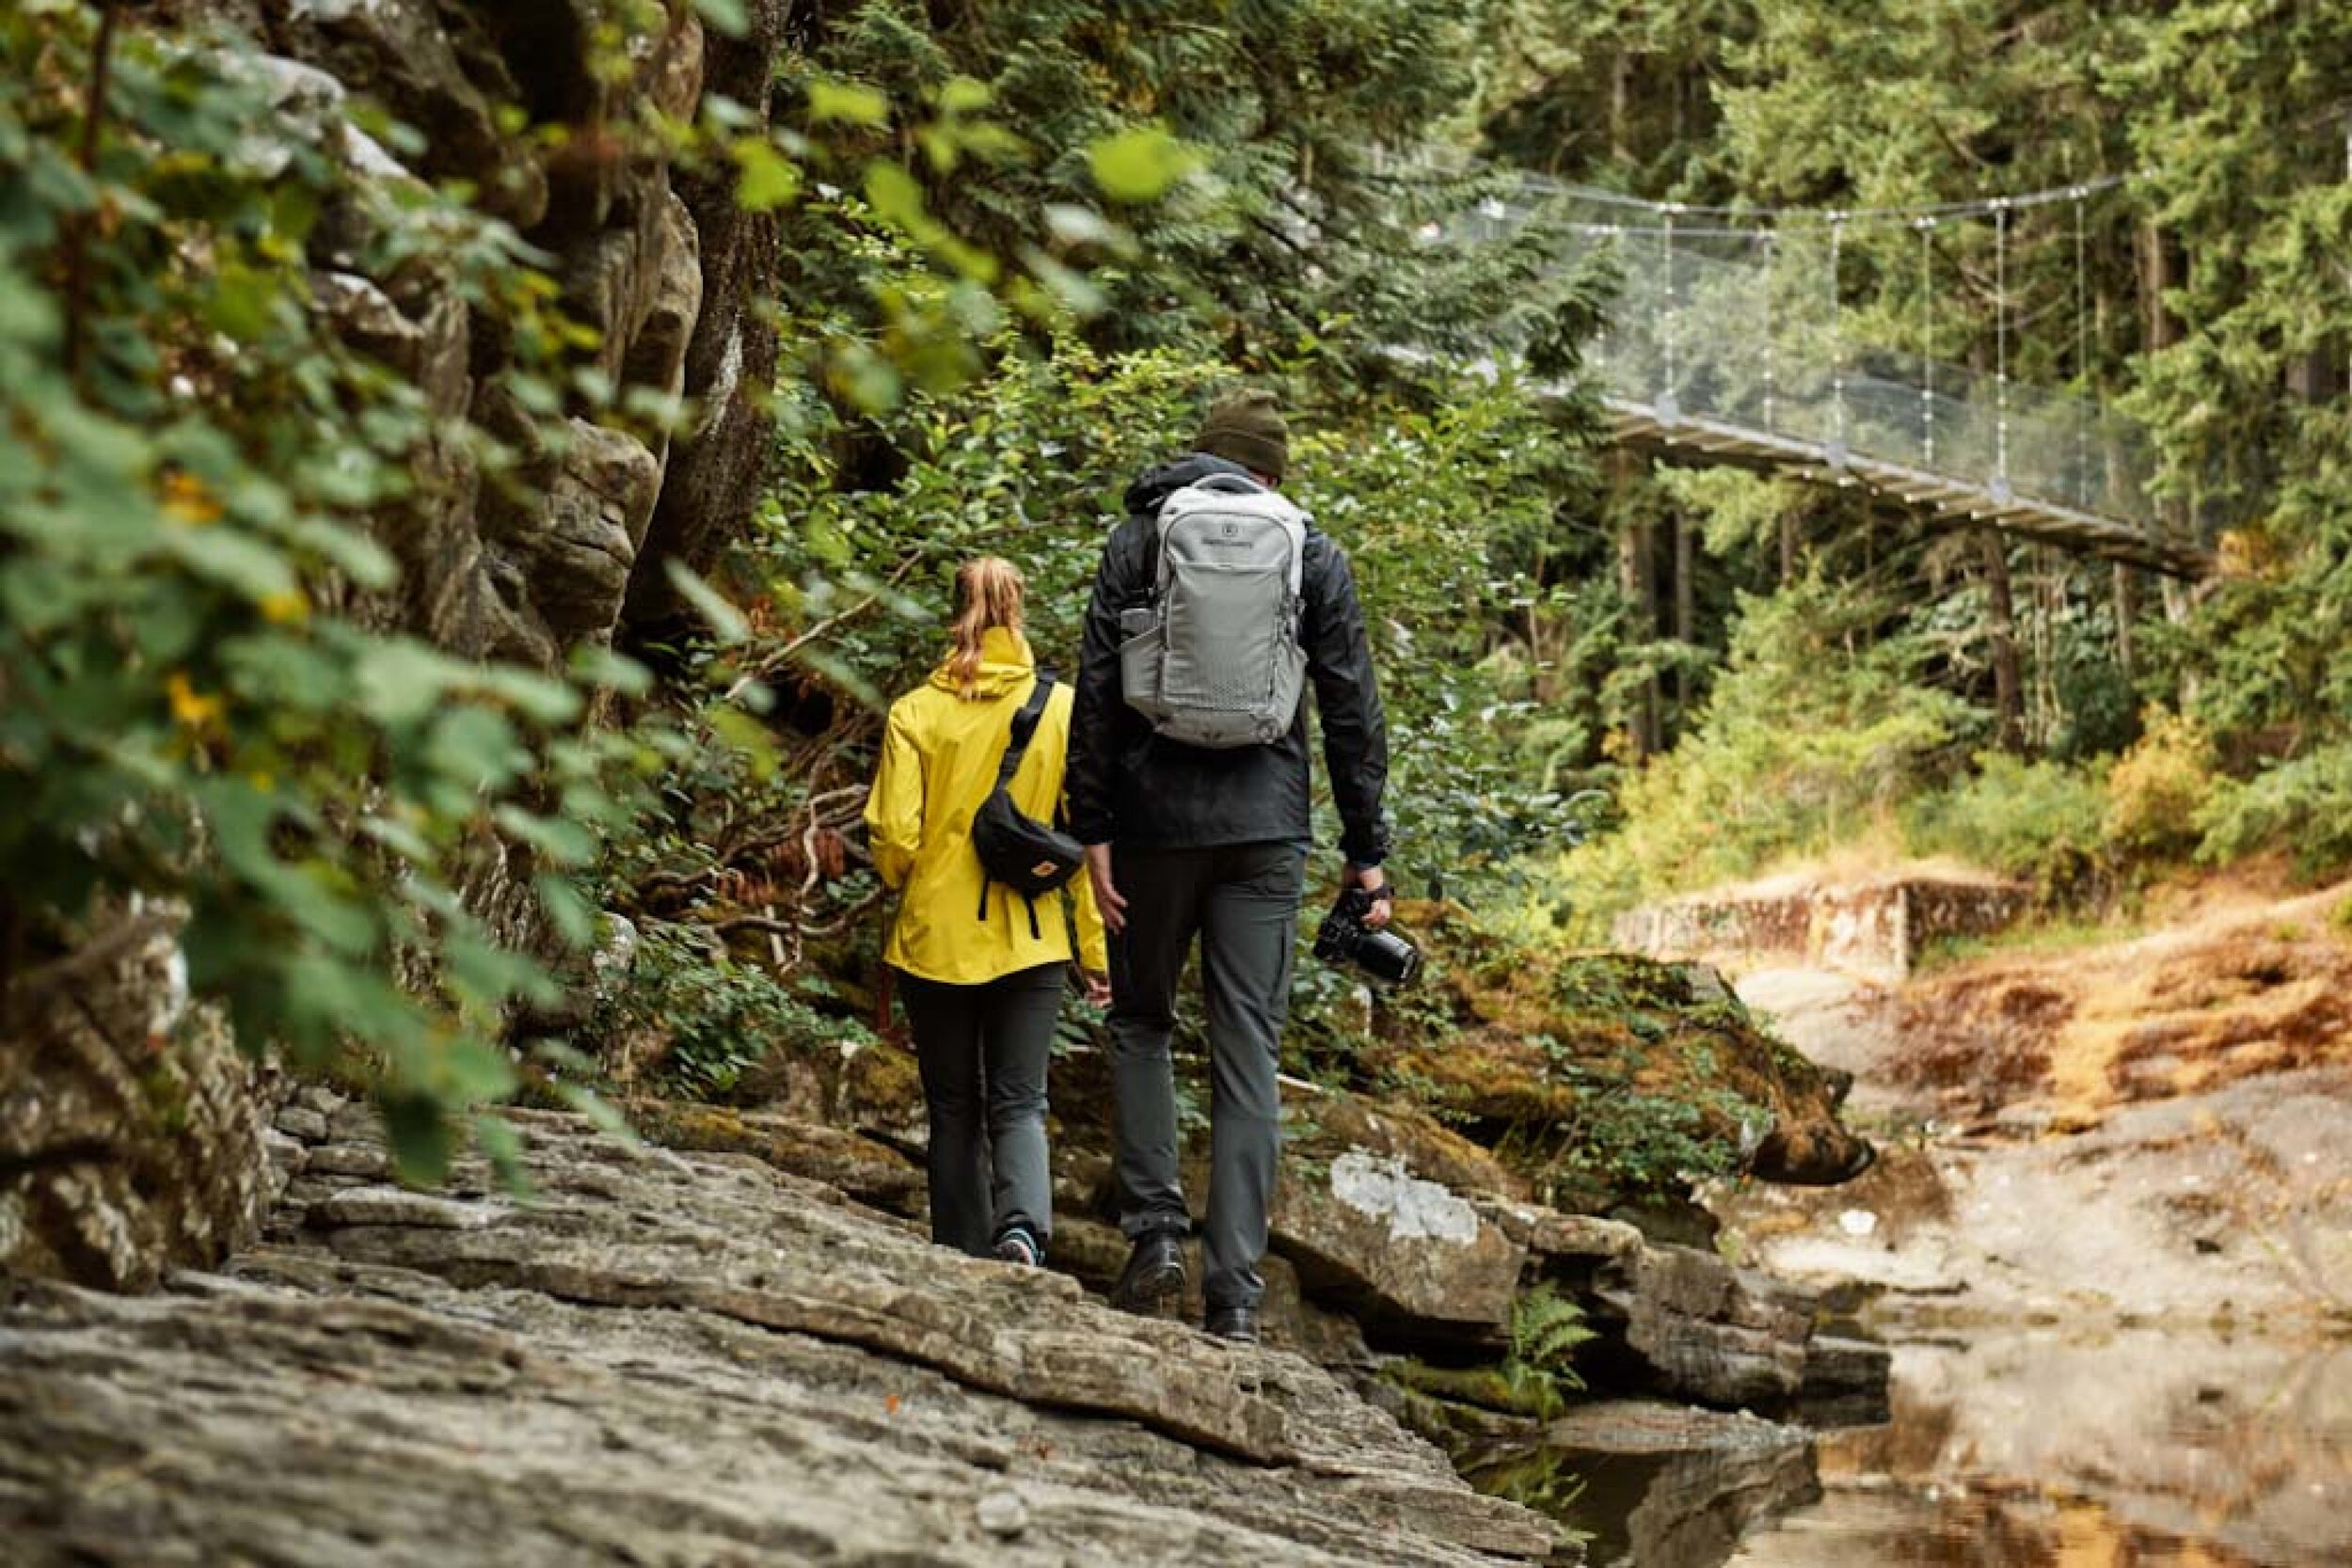   Backcountry Gear &amp; Apparel Travel ’19    Pursuit : Adventure Travel    Location : Vancouver, ON   Producer : Tyler Arrivillaga   Photographer : Jordan Haggard 